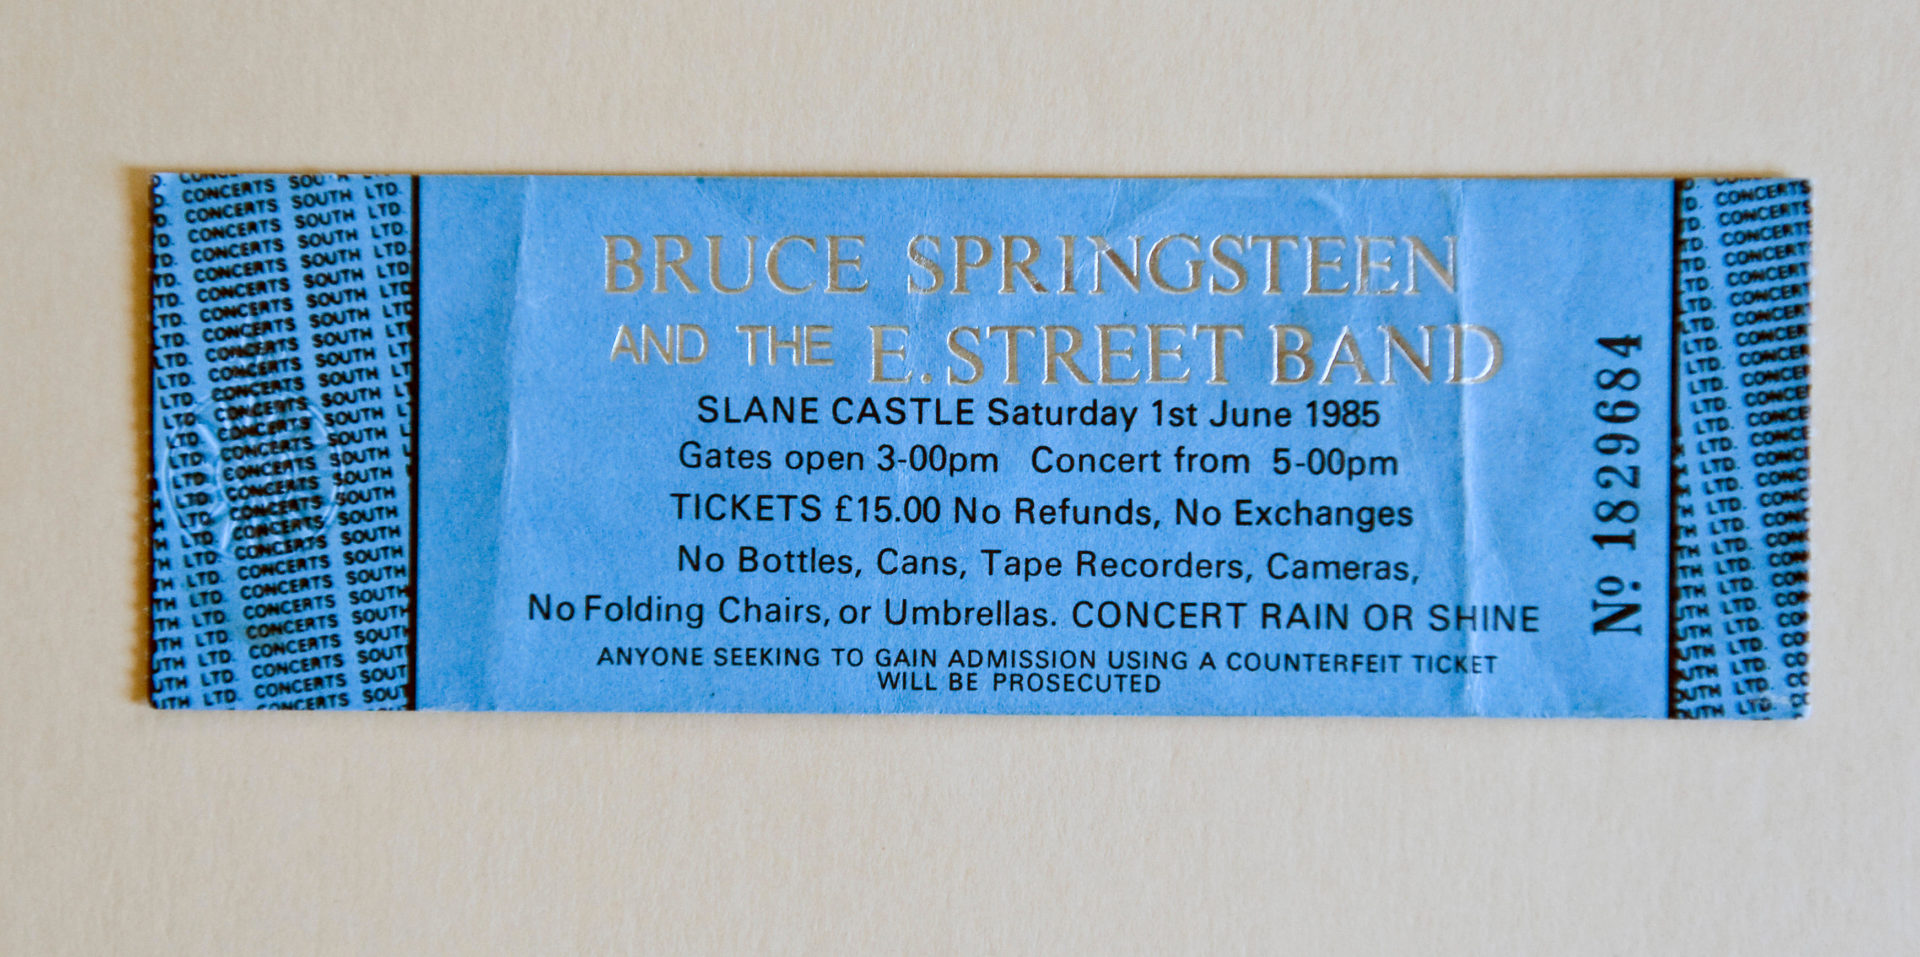 Ticket stub from a 1985 Dublin, Ireland Bruce Springsteen concert